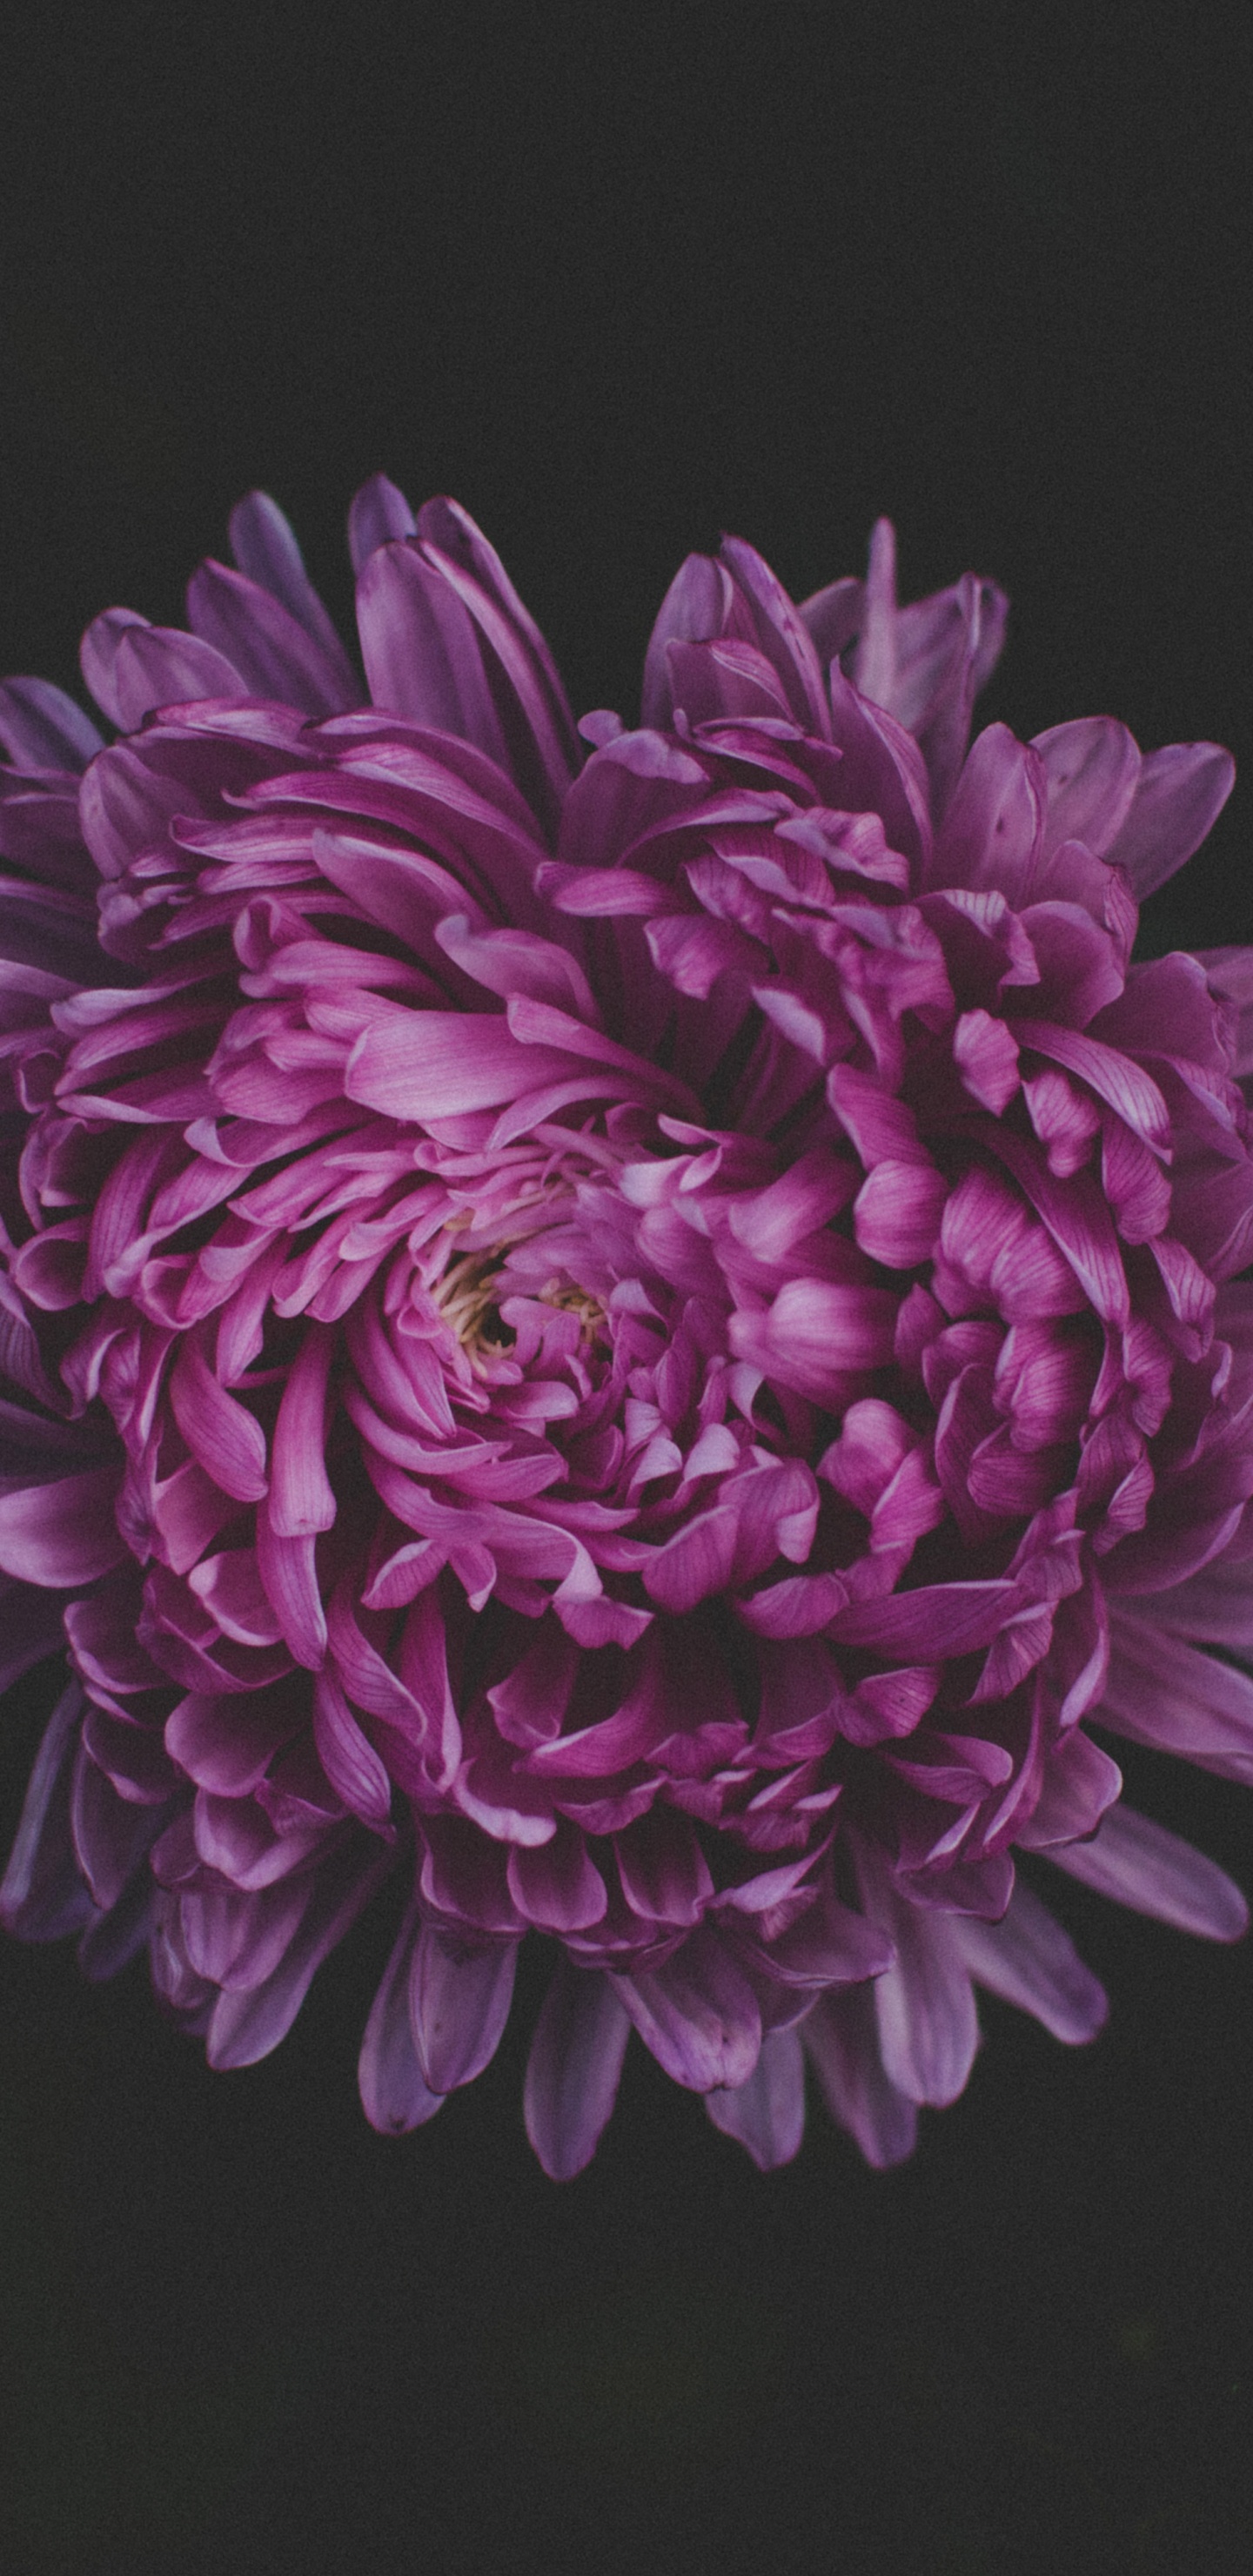 Purple Flower on Black Background. Wallpaper in 1440x2960 Resolution